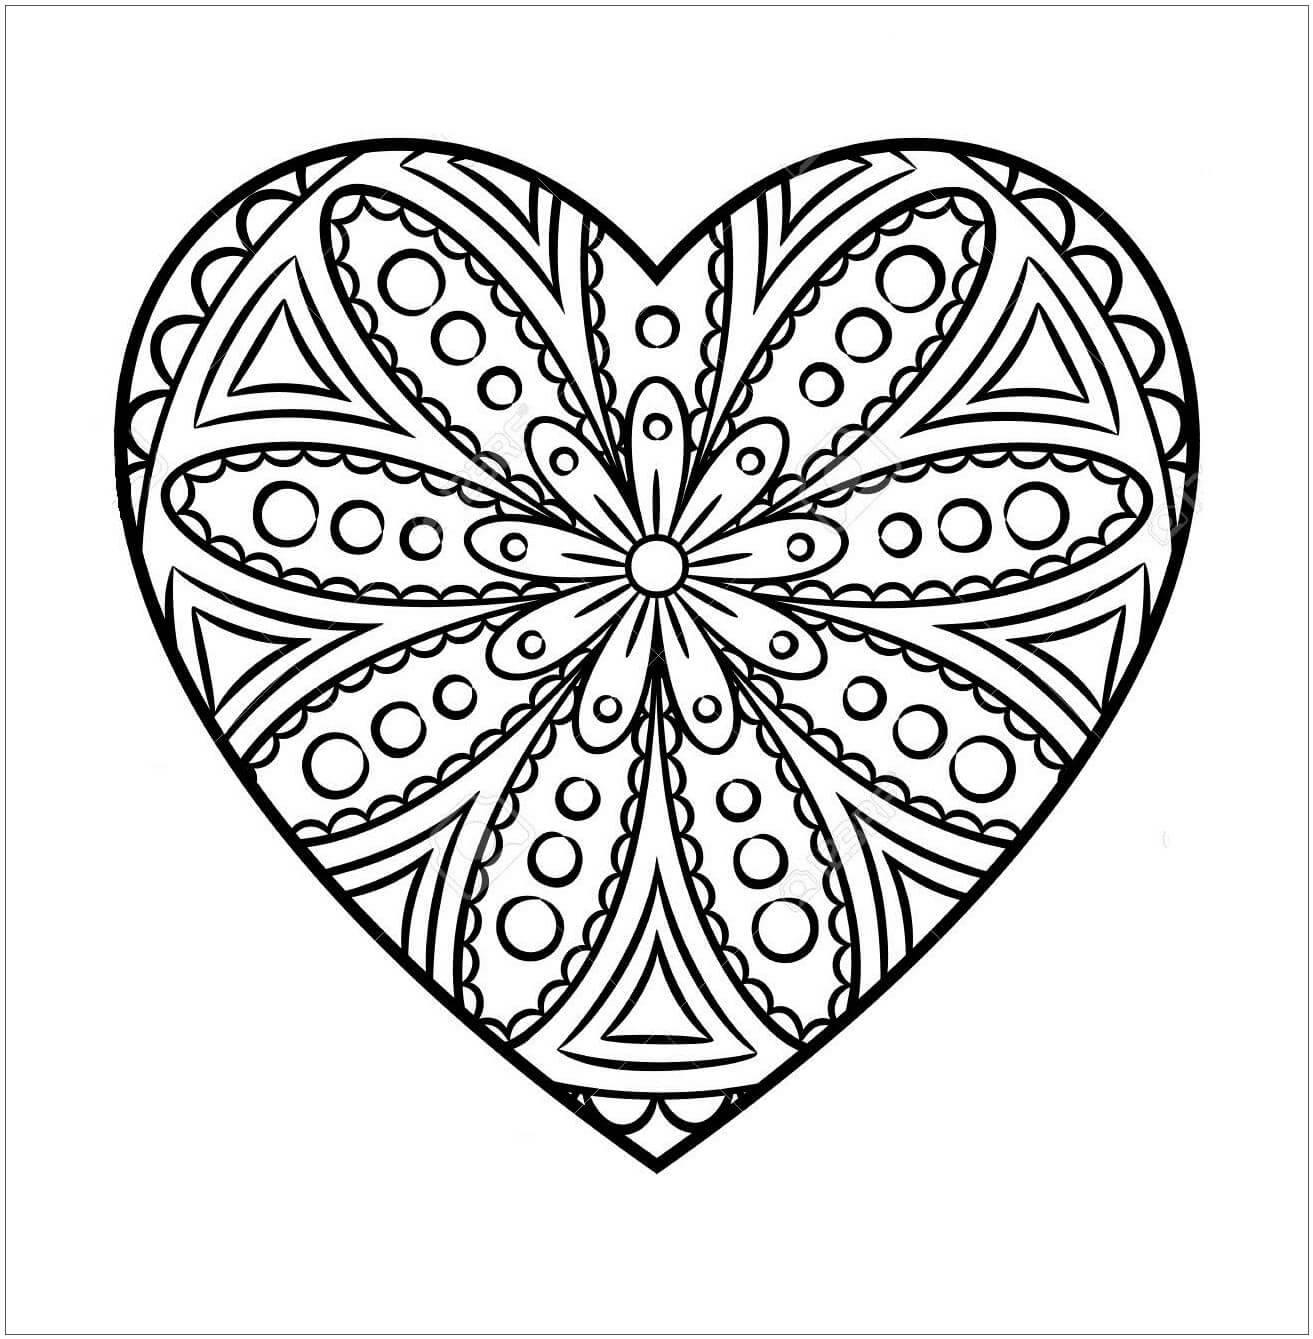 Målarbild Hjärta Mandala 3